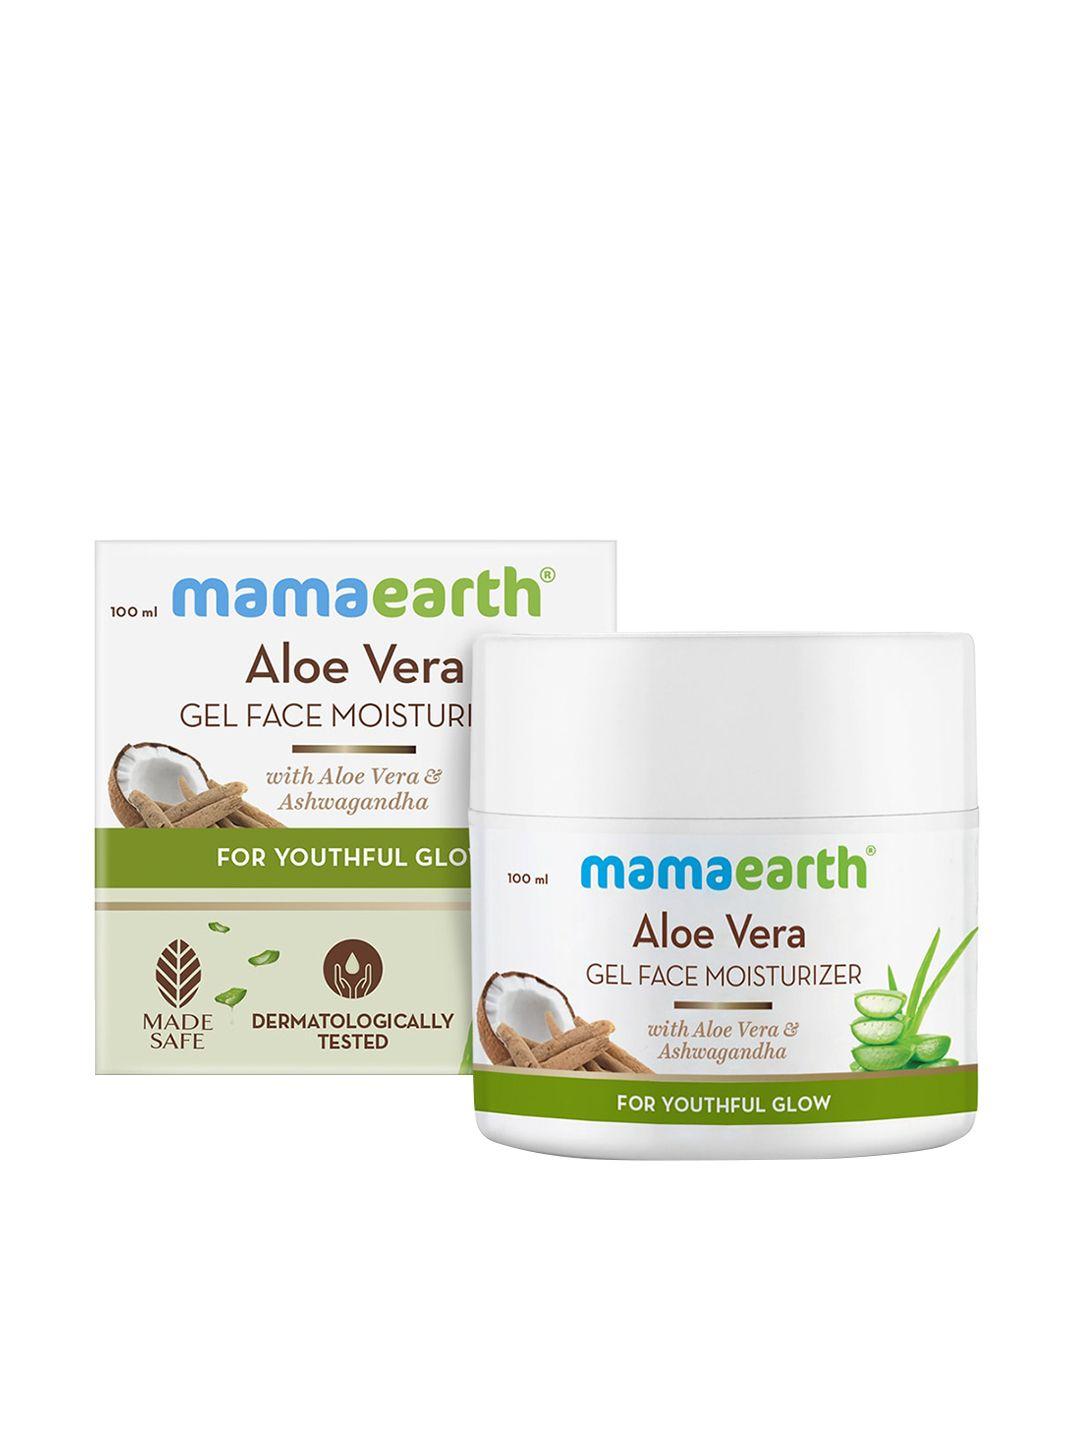 mamaearth aloe vera gel face moisturizer with ashwagandha 100 g